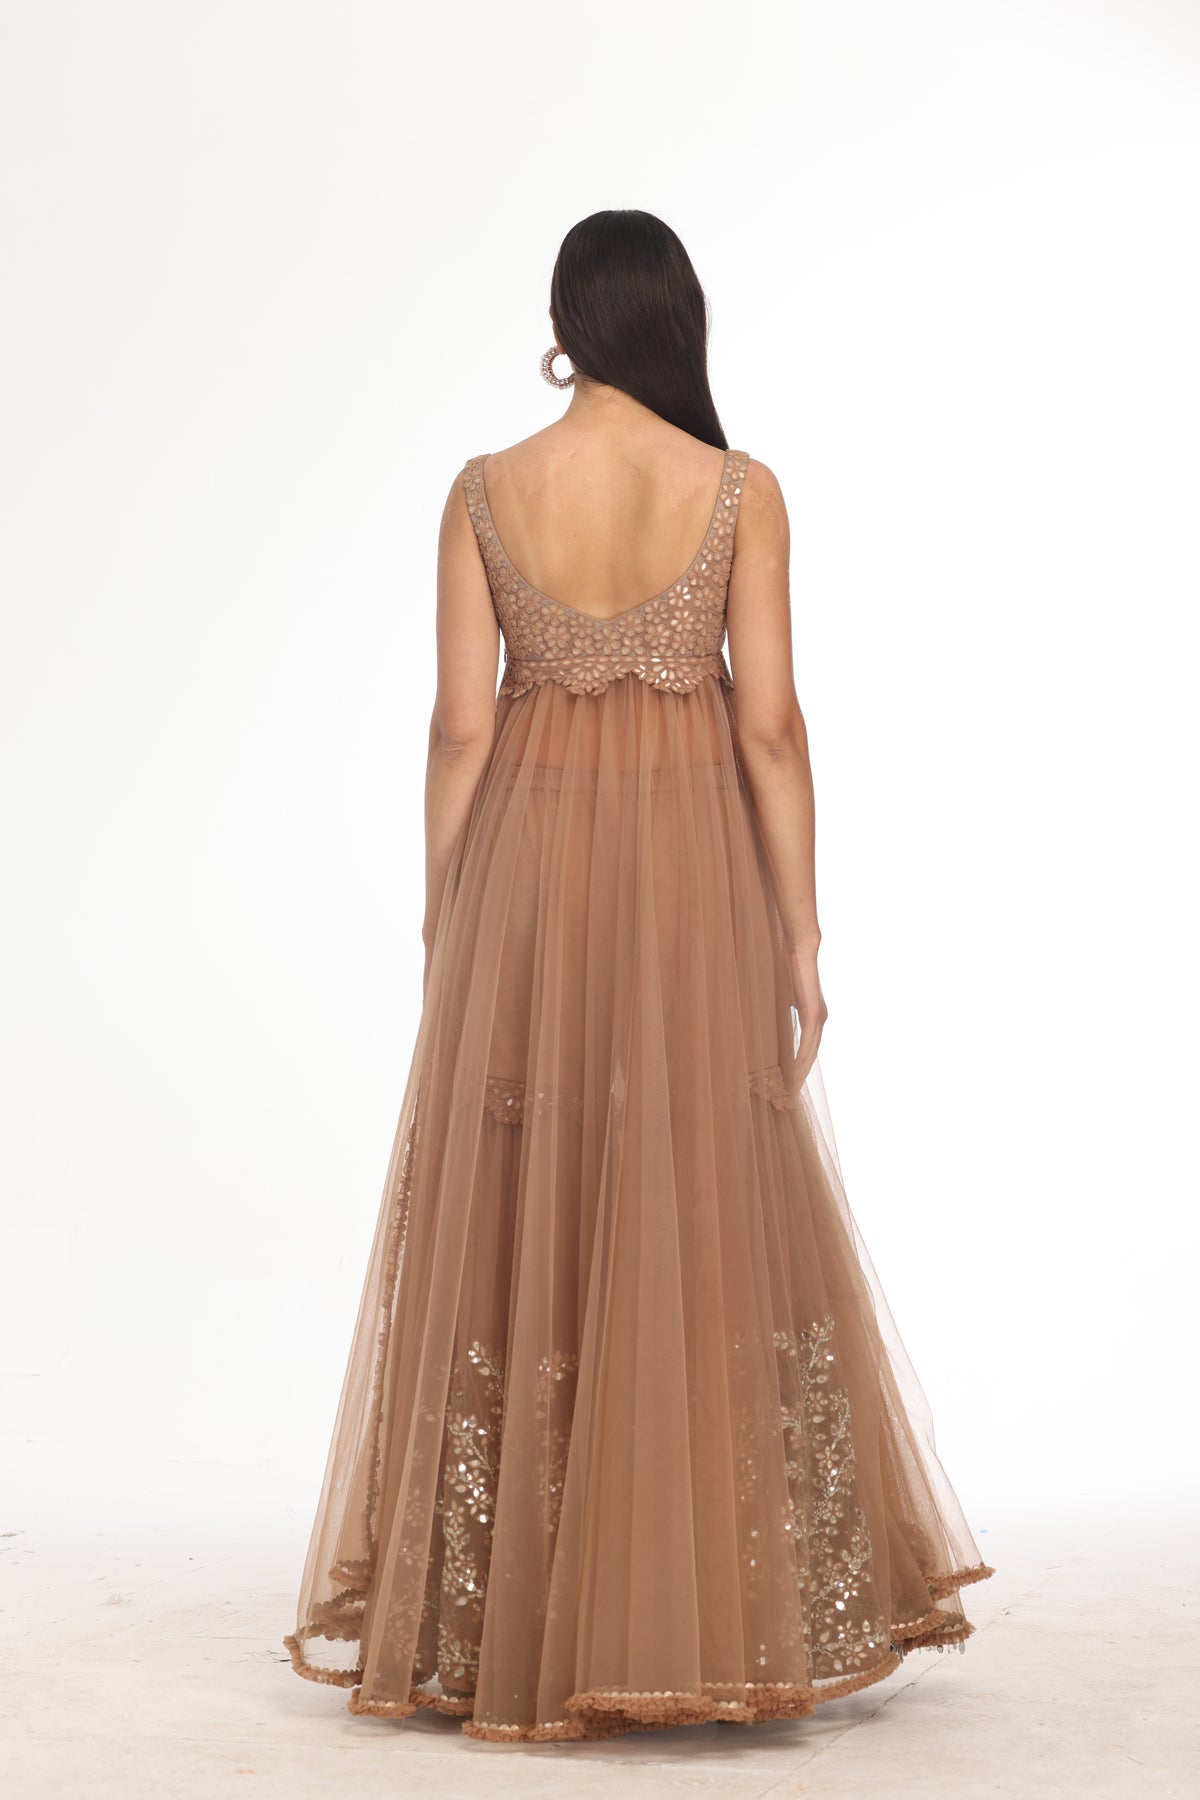 Brown Dress With Mirror Sharara